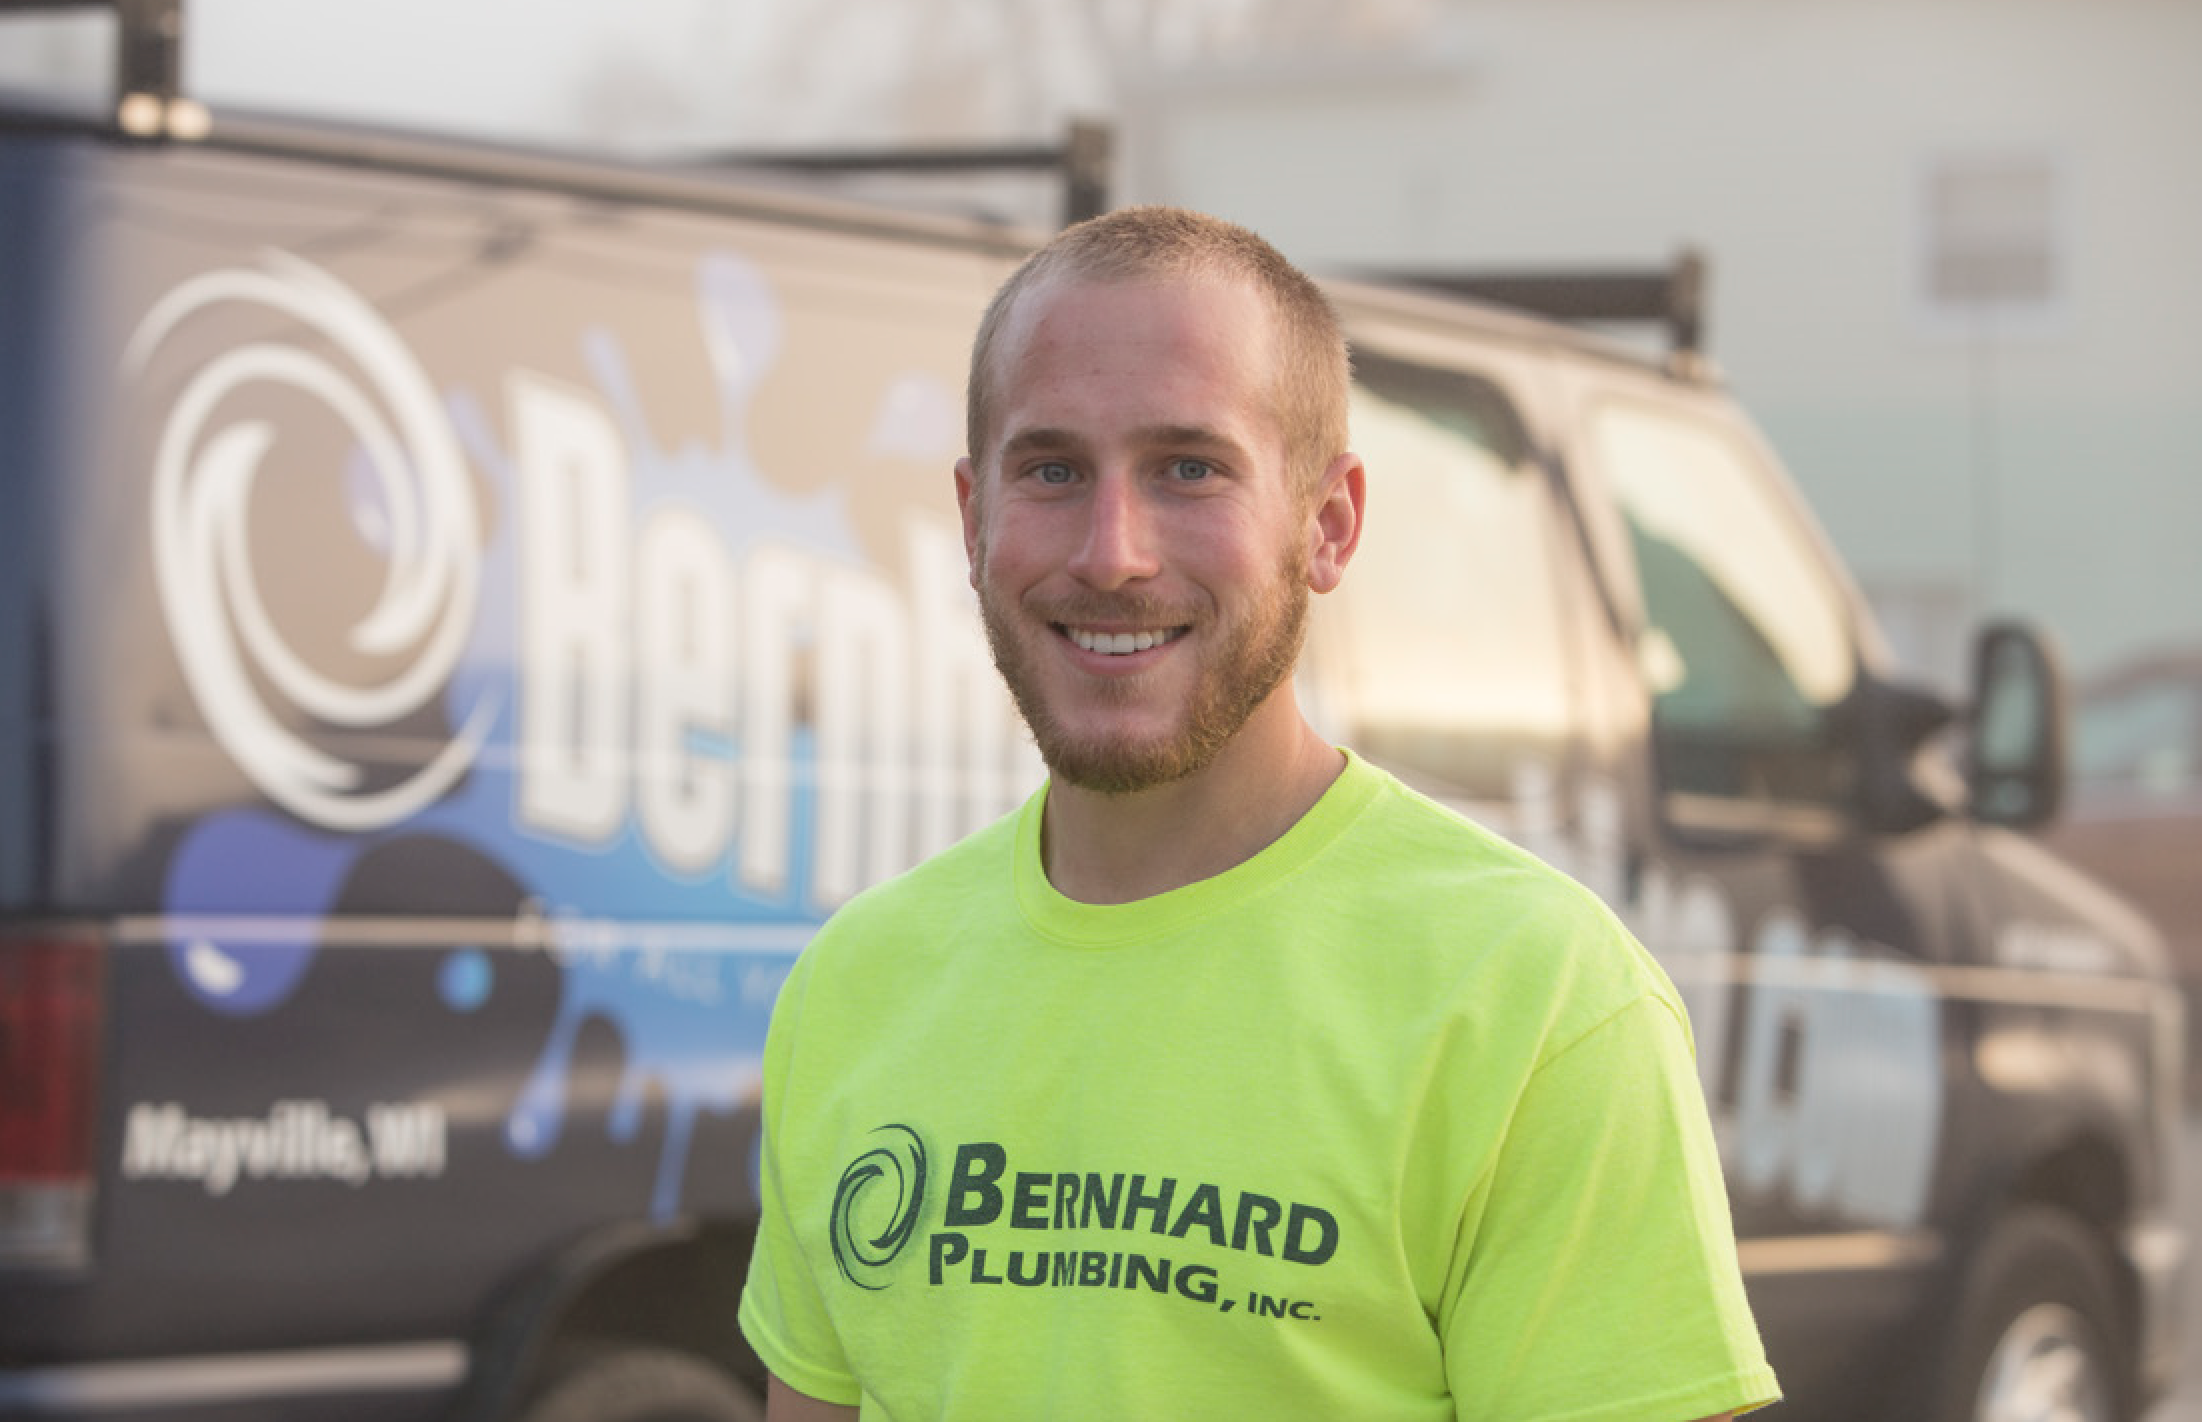 Mike Neuman, Plumbing Apprentice at Bernhard Plumbing